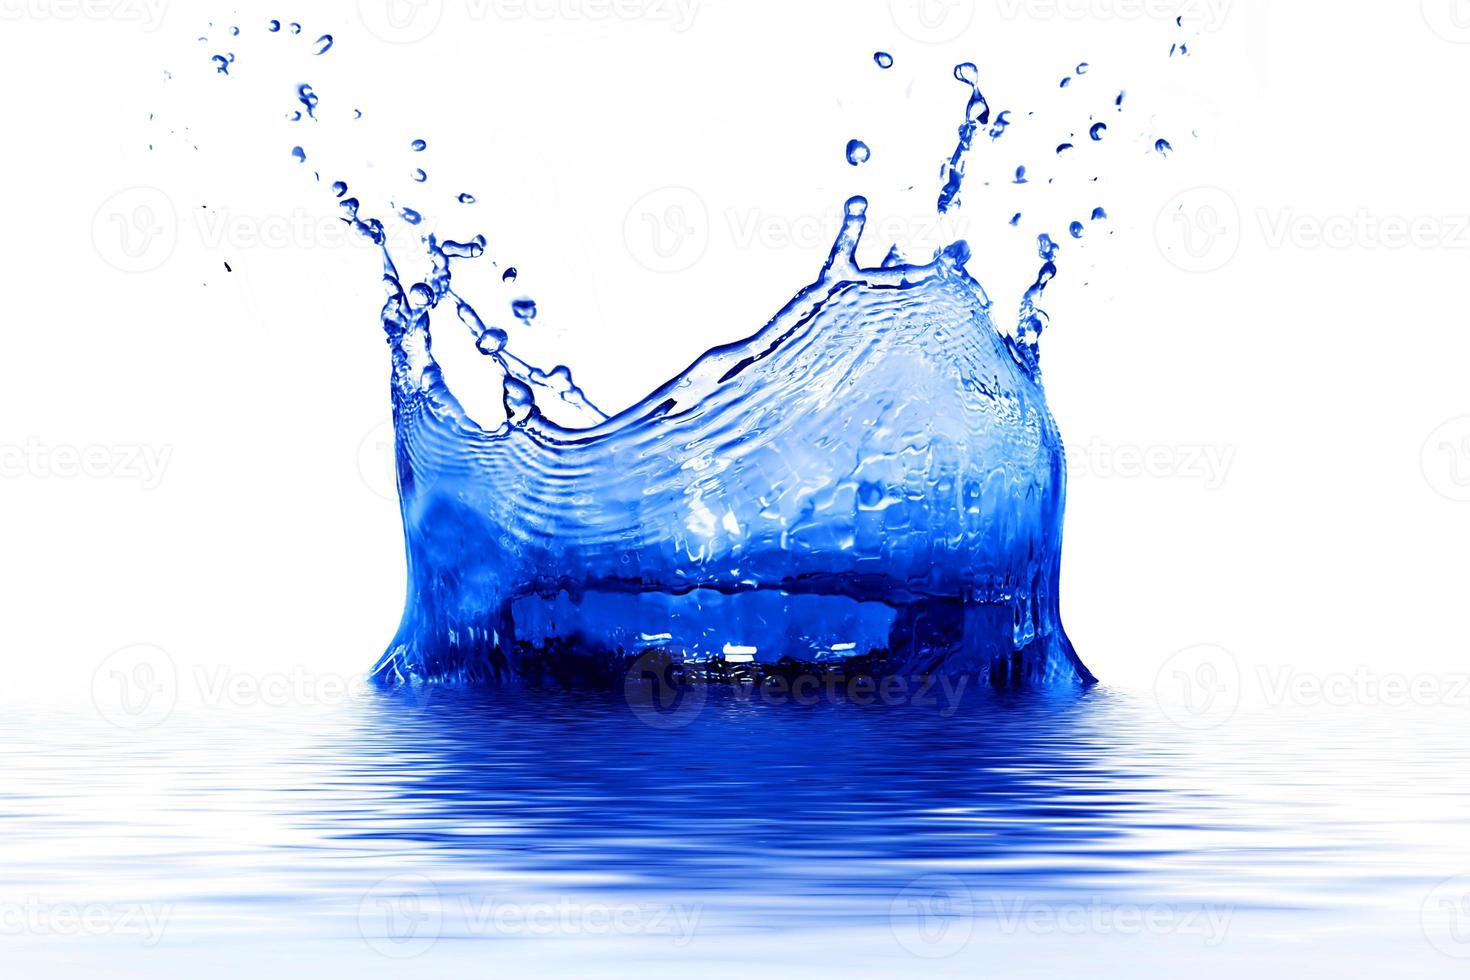 blauw transparant waterplons realistisch mooi blauw schoon water op wit. foto